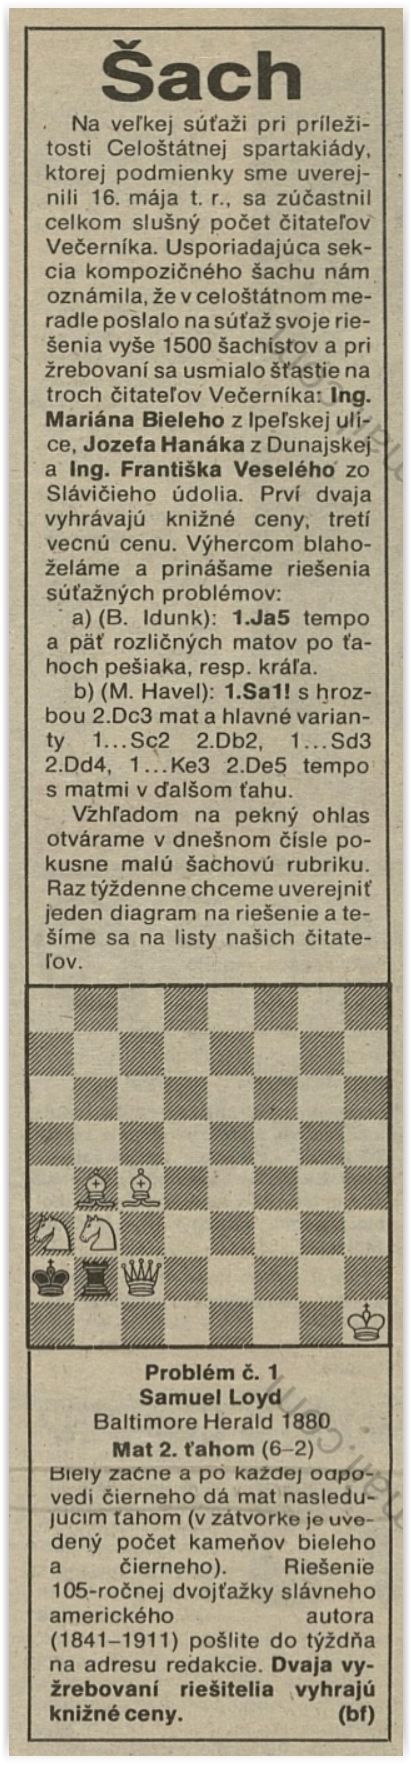 Večerník r.1985 rubrika č.1